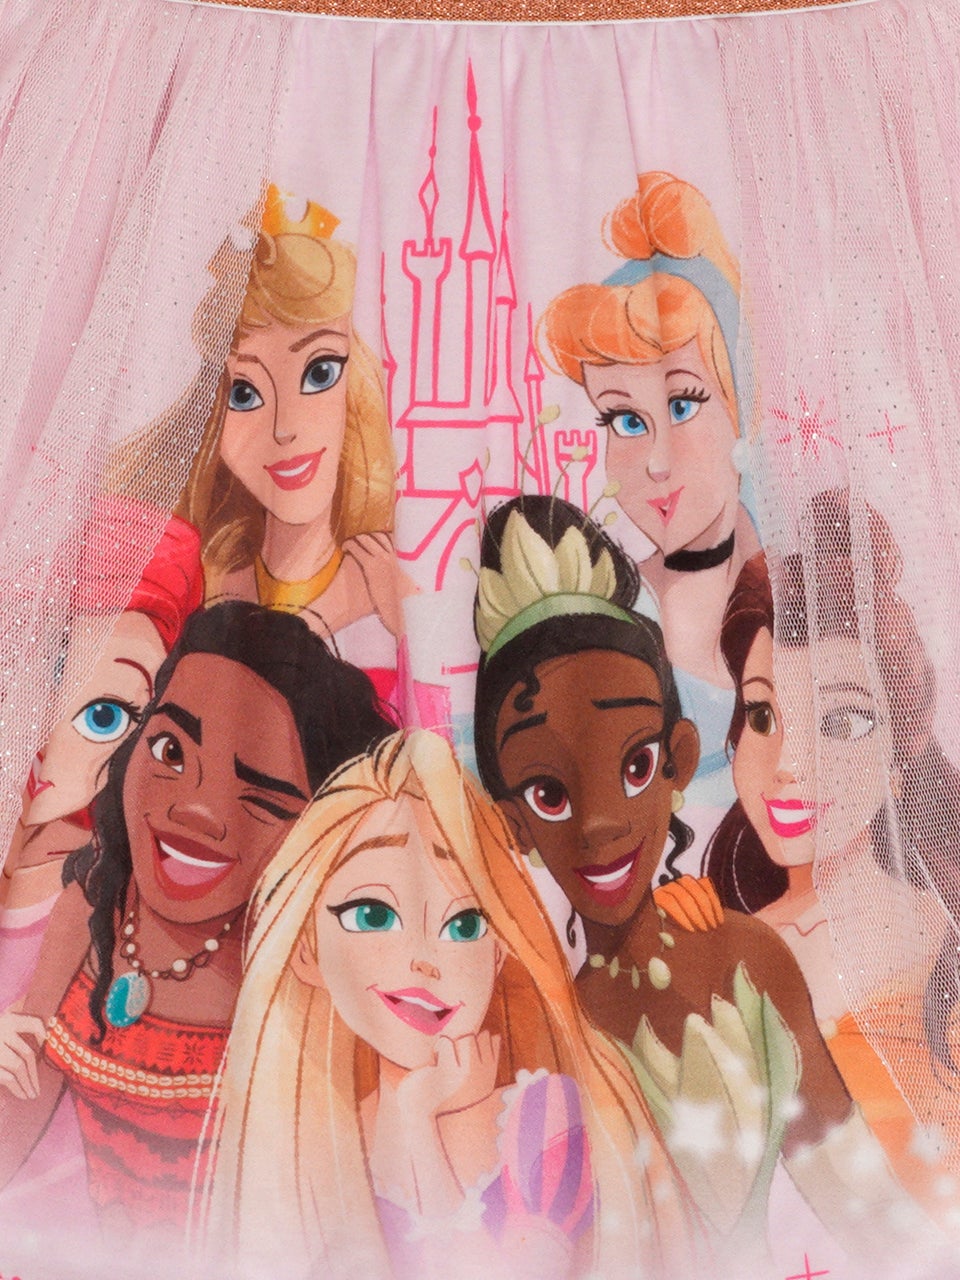 Brand Threads Kids' Disney Princess Nightie